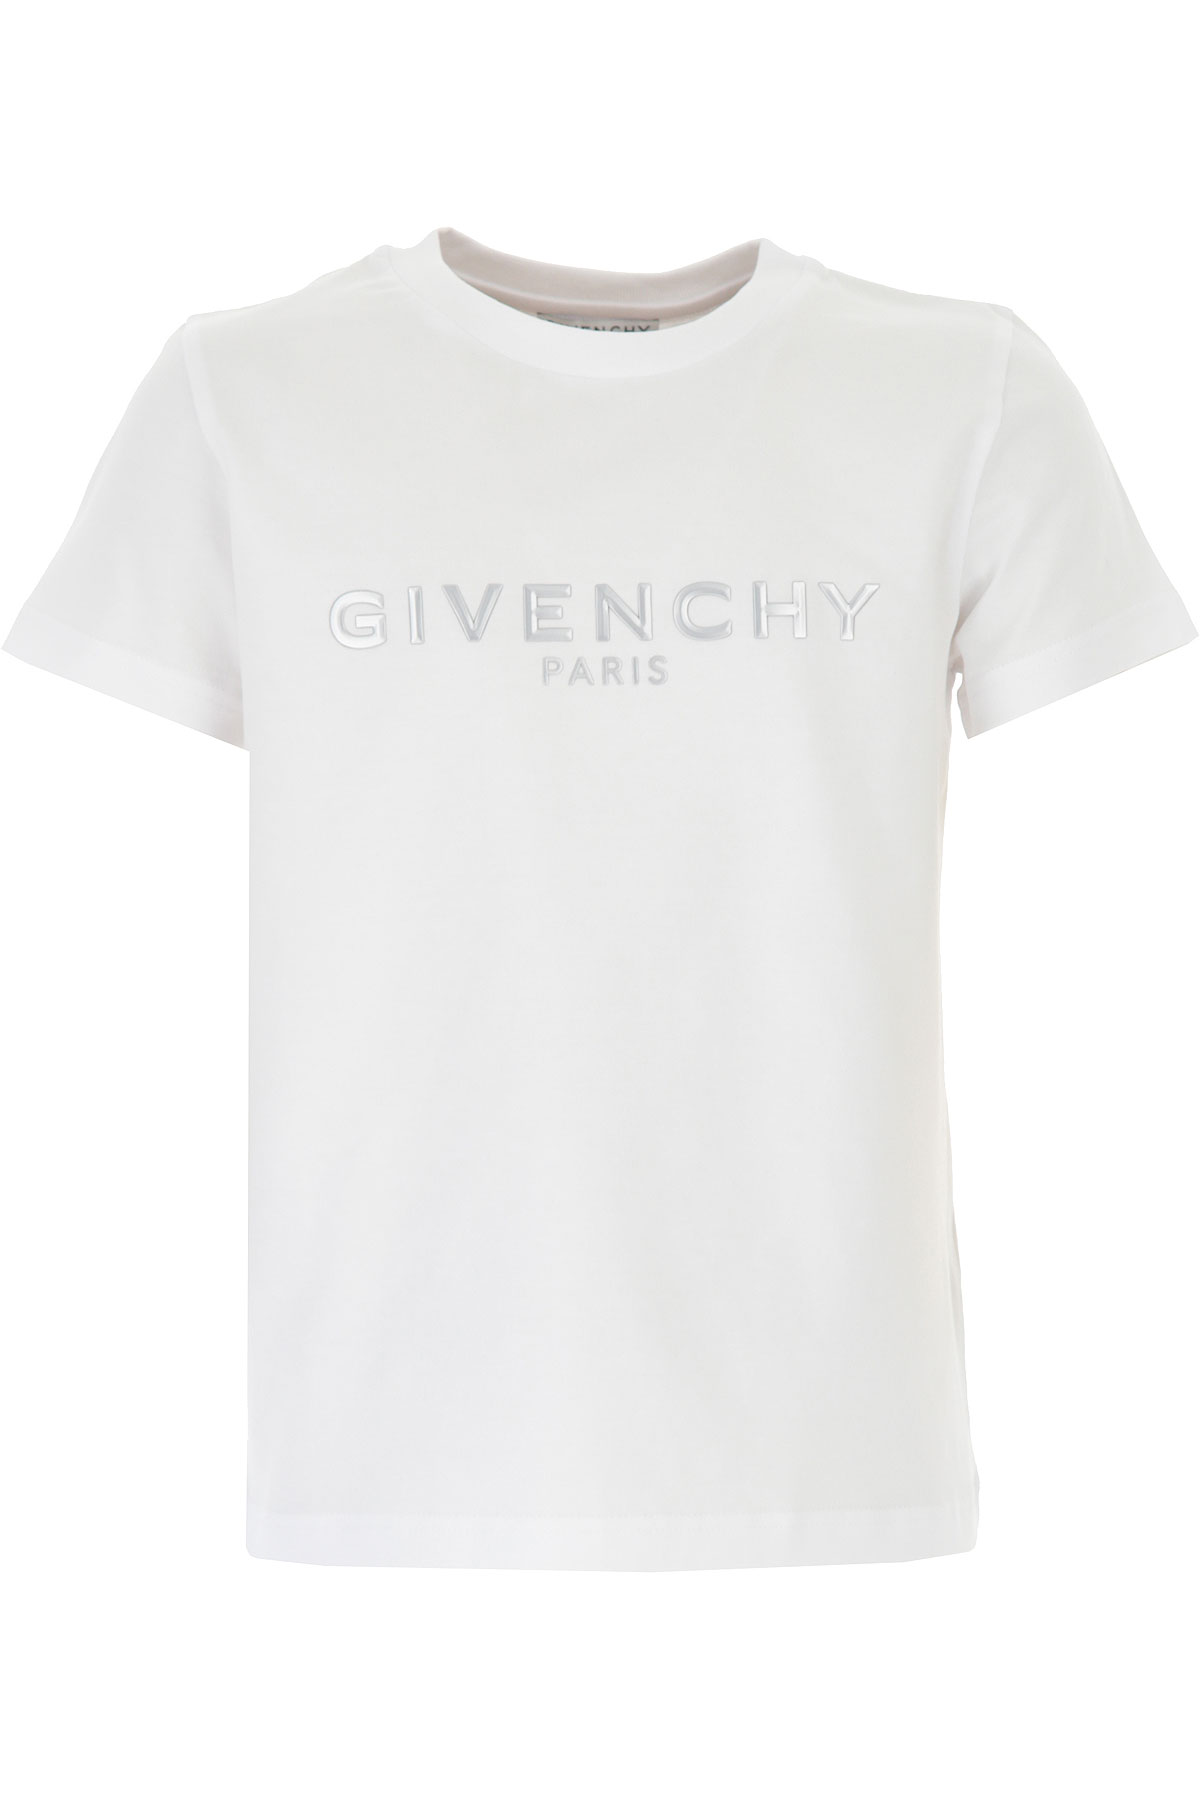 Kidswear Givenchy, Style code: h25247-10b-